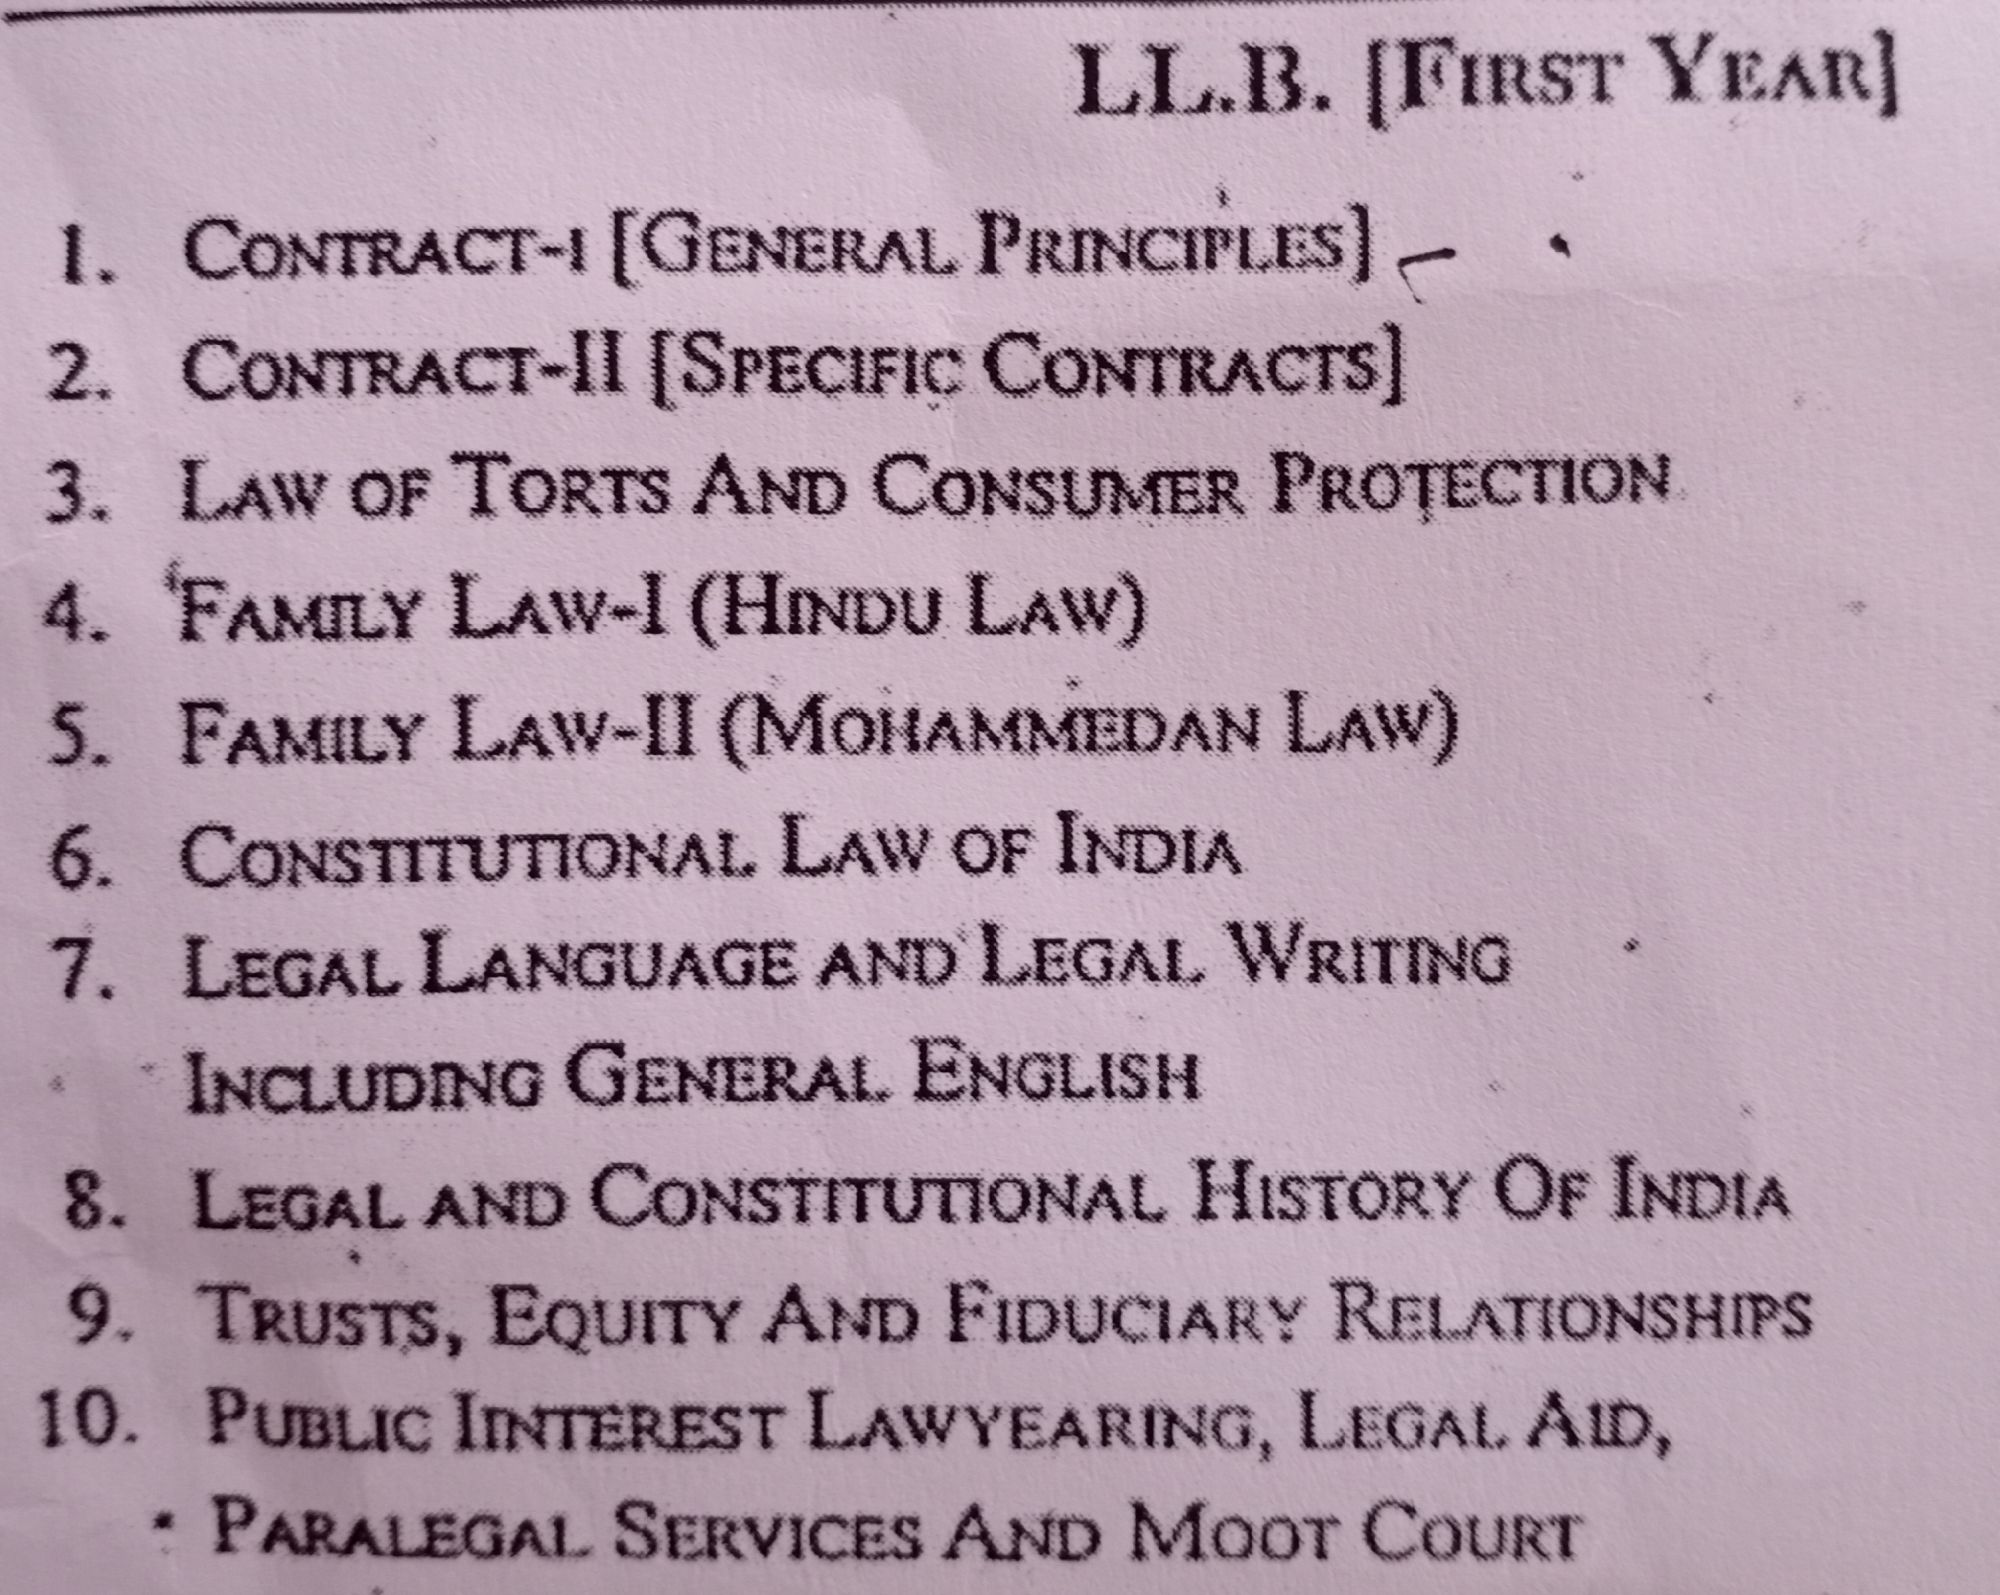 Basanti Lal Babel Legal Language And Legal Writing Including General English in English Medium